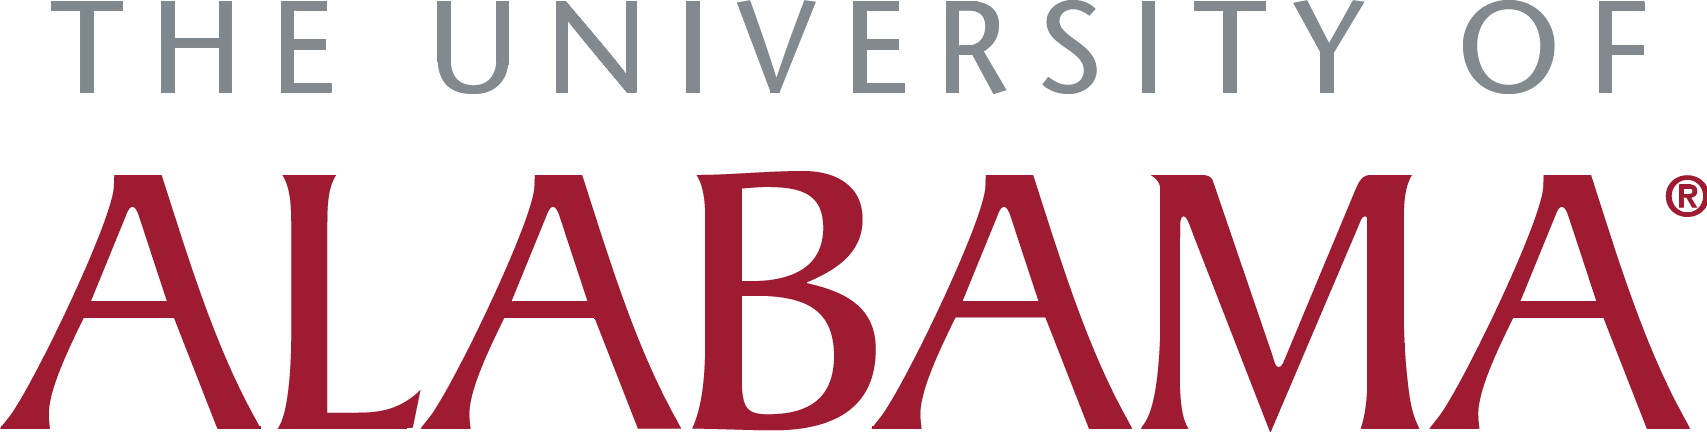 clip art university of alabama logo - photo #35